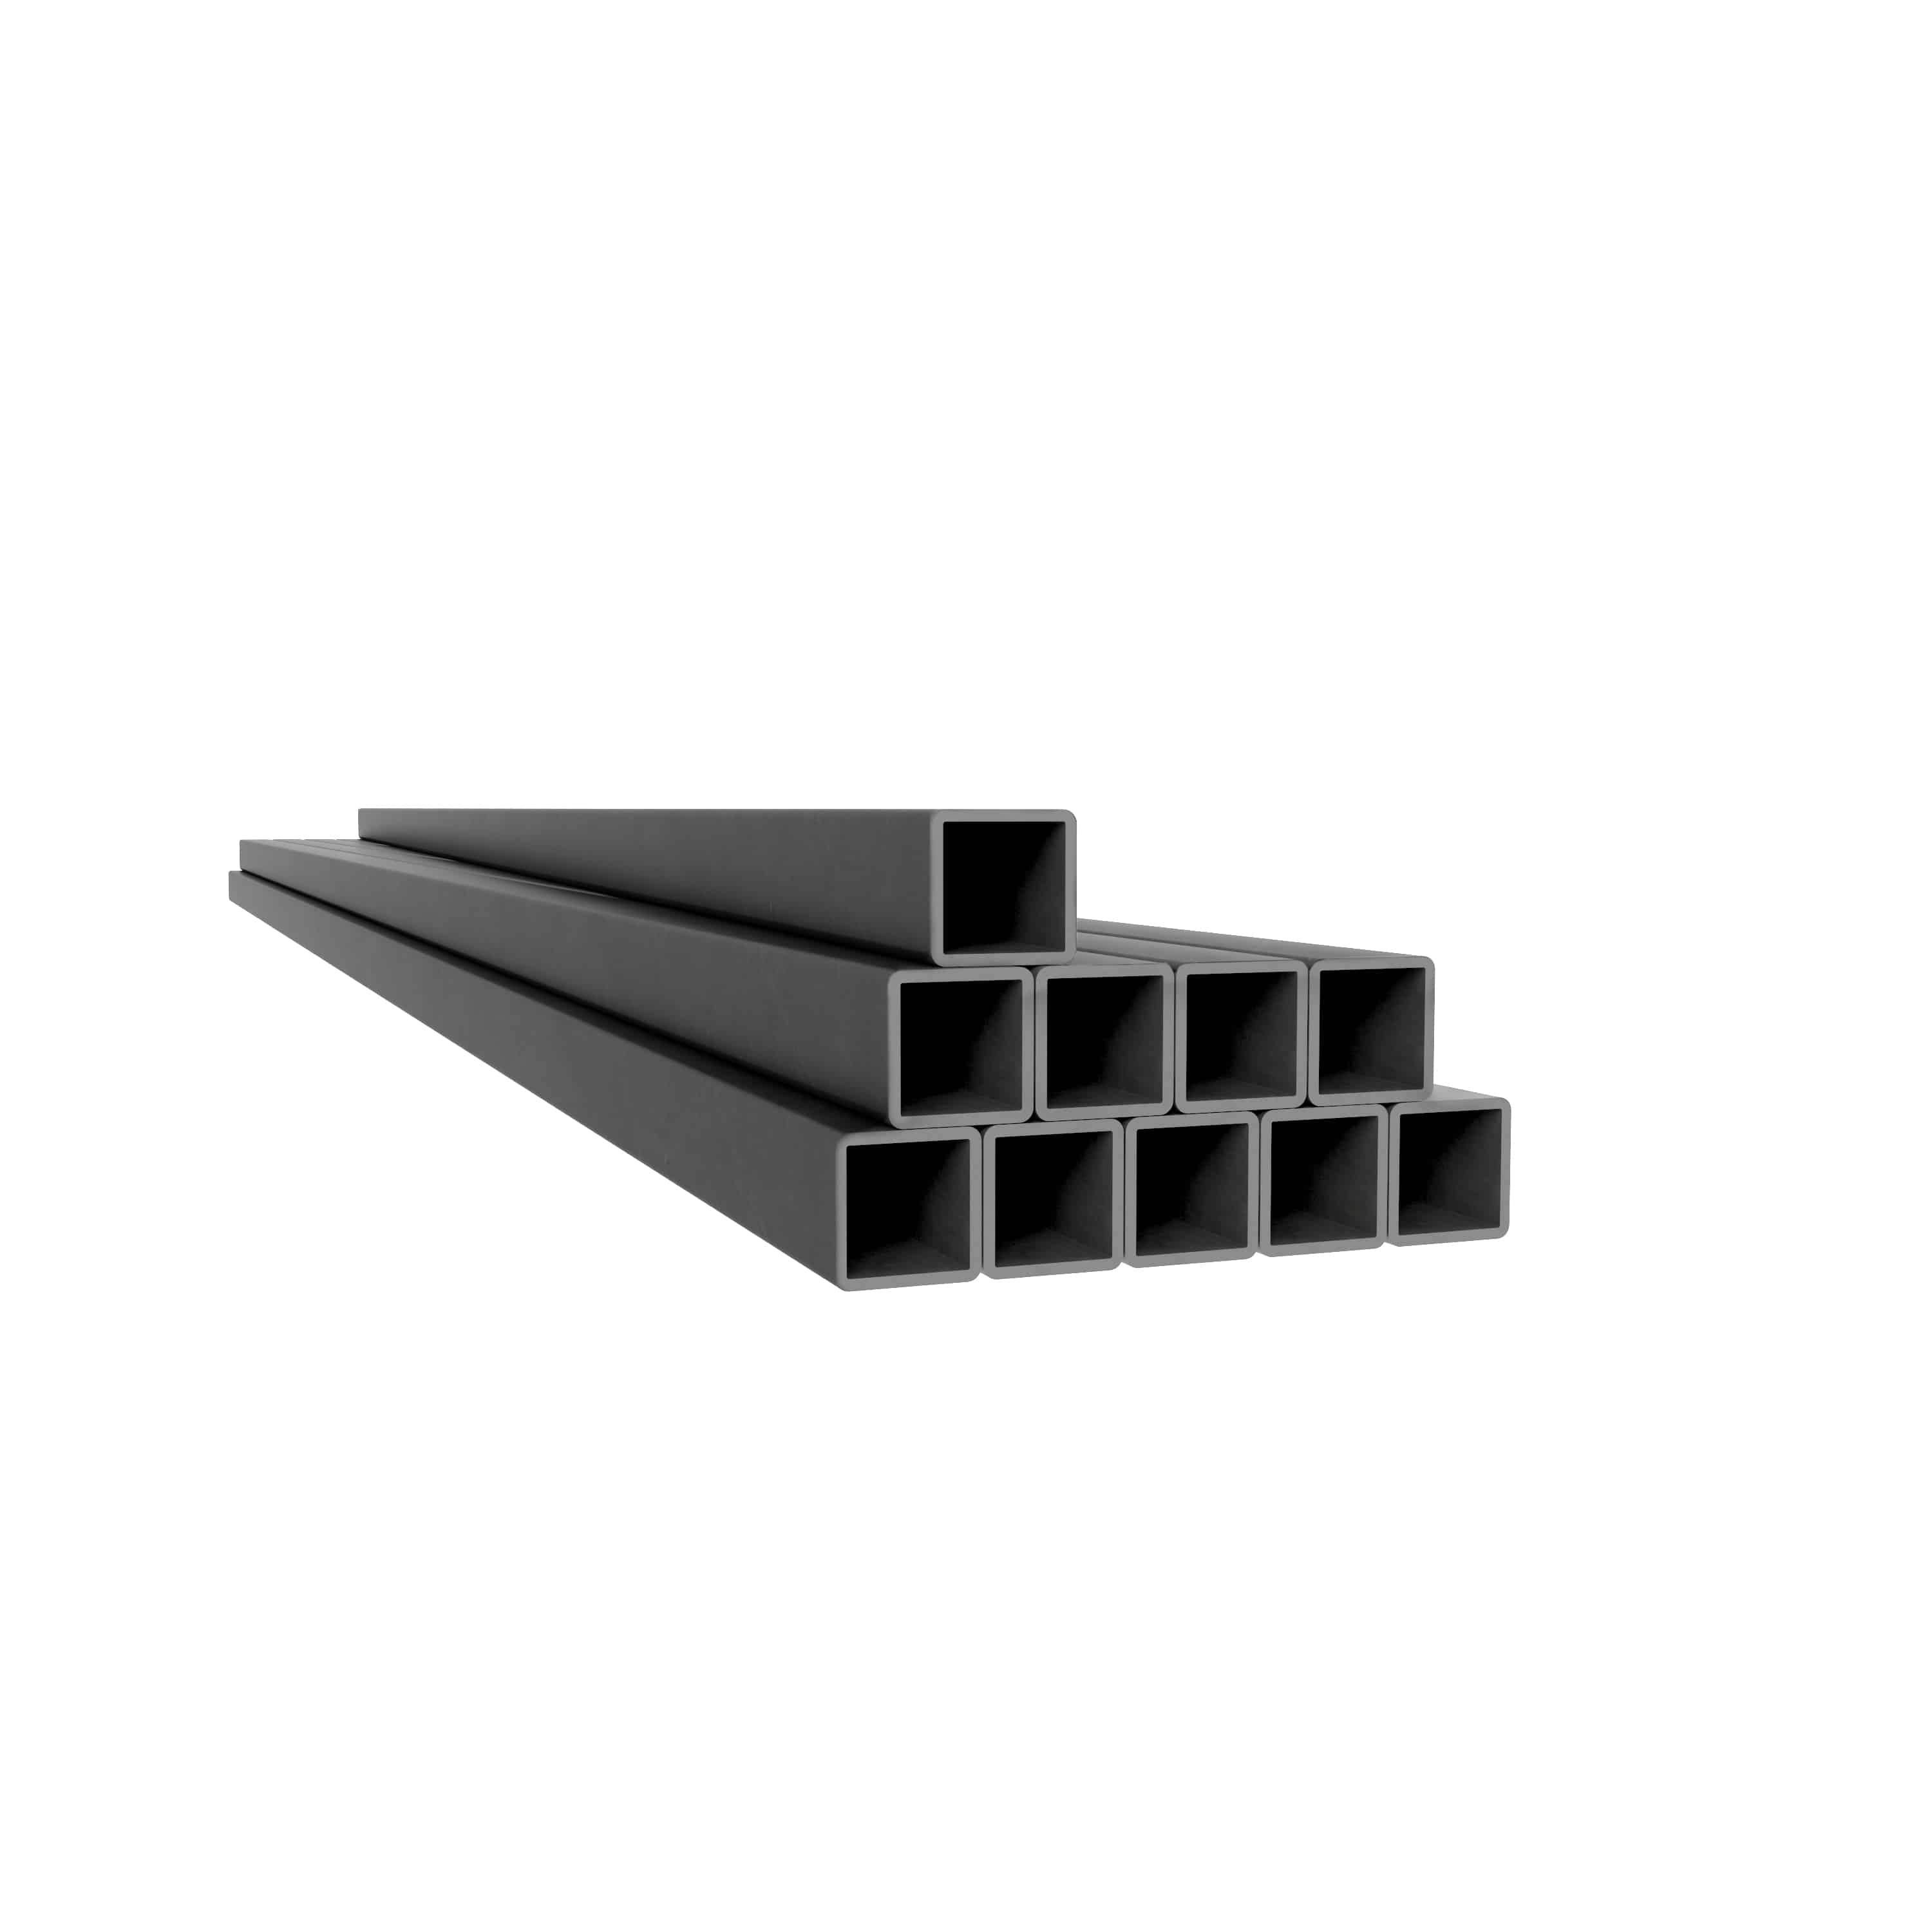 Square Pipe - Square pipe 150 x 150 x 4 mm S235-6LM, https:maxbau.ro